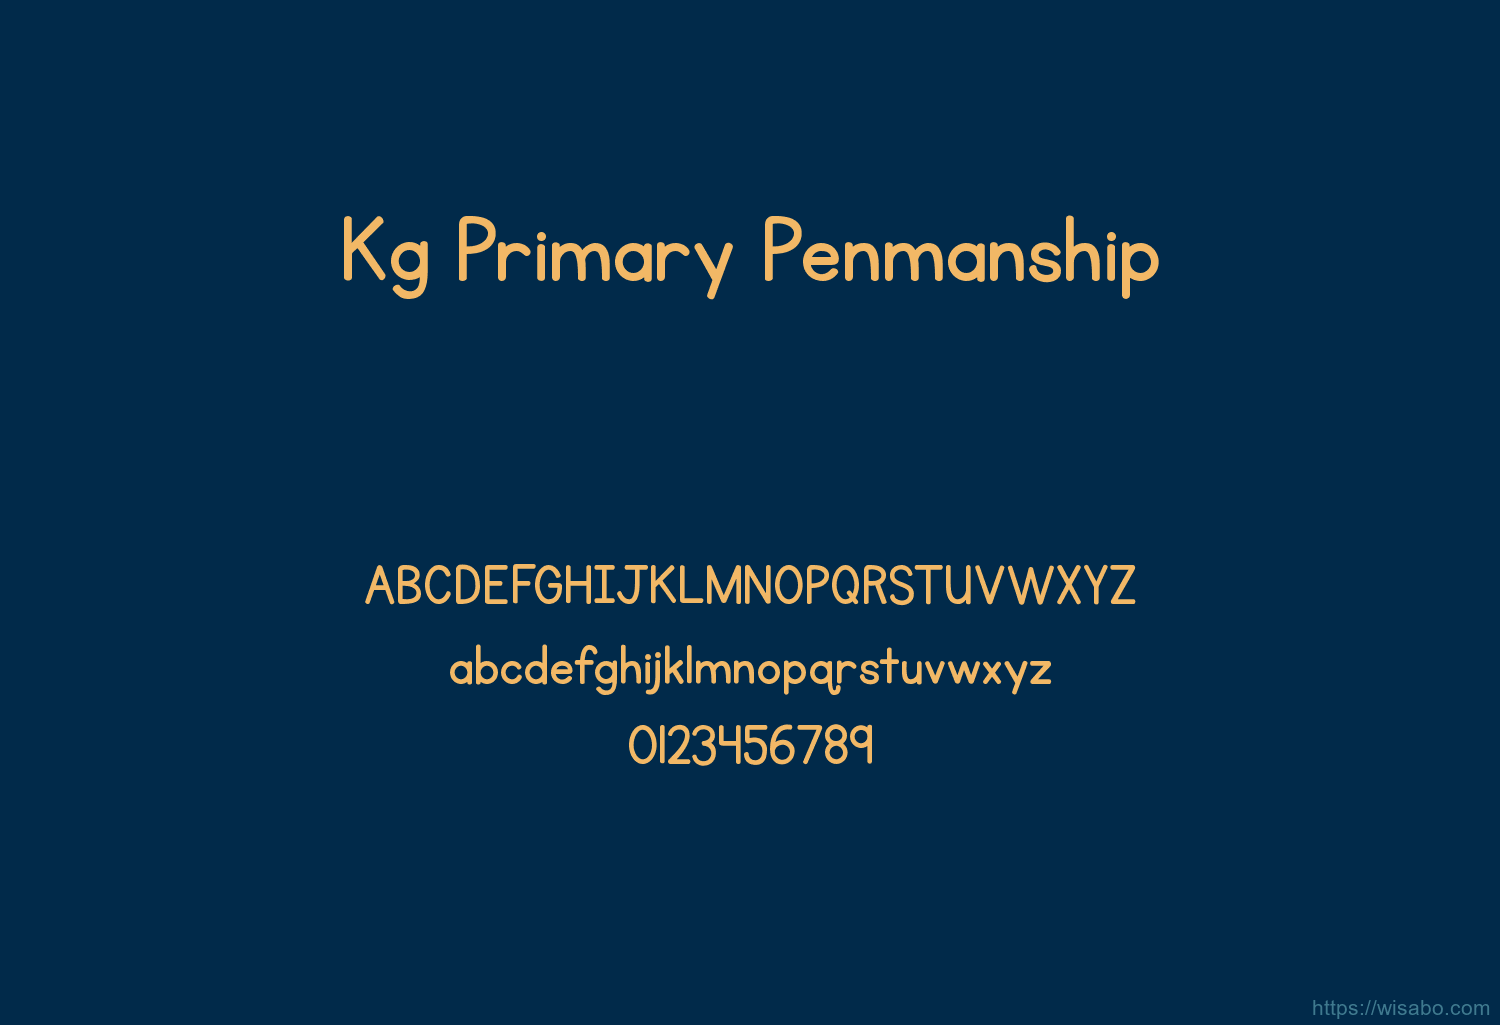 Kg Primary Penmanship